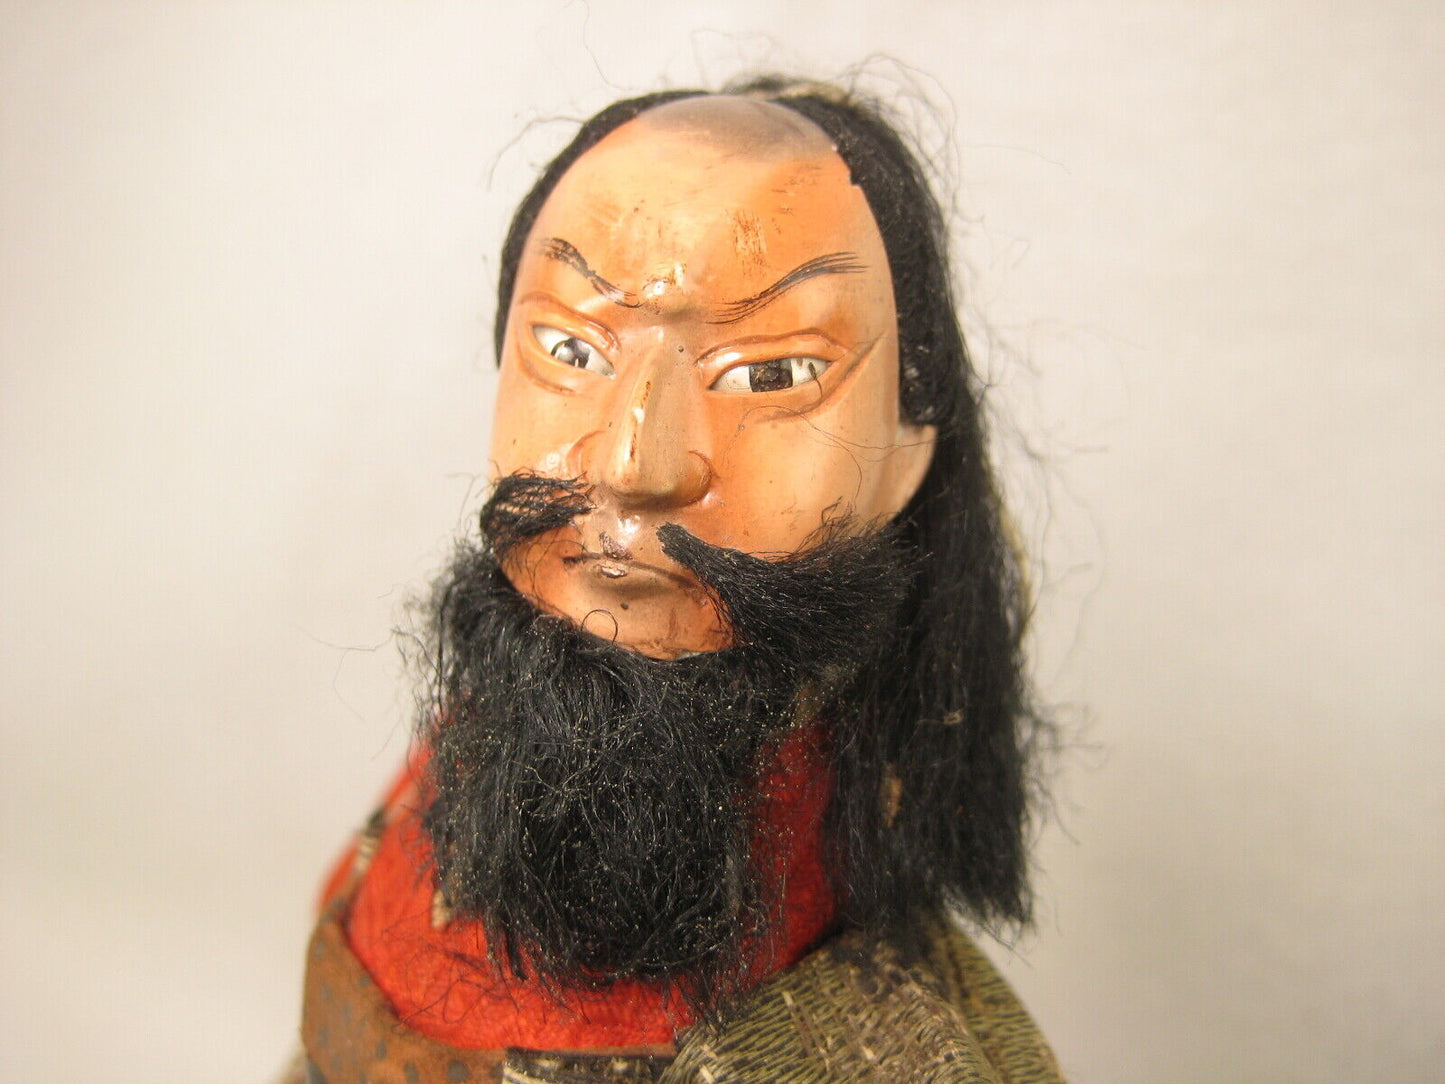 Antique Japanese Samurai Warrior Doll Wood Gofun Face Fierce General  W/Sword